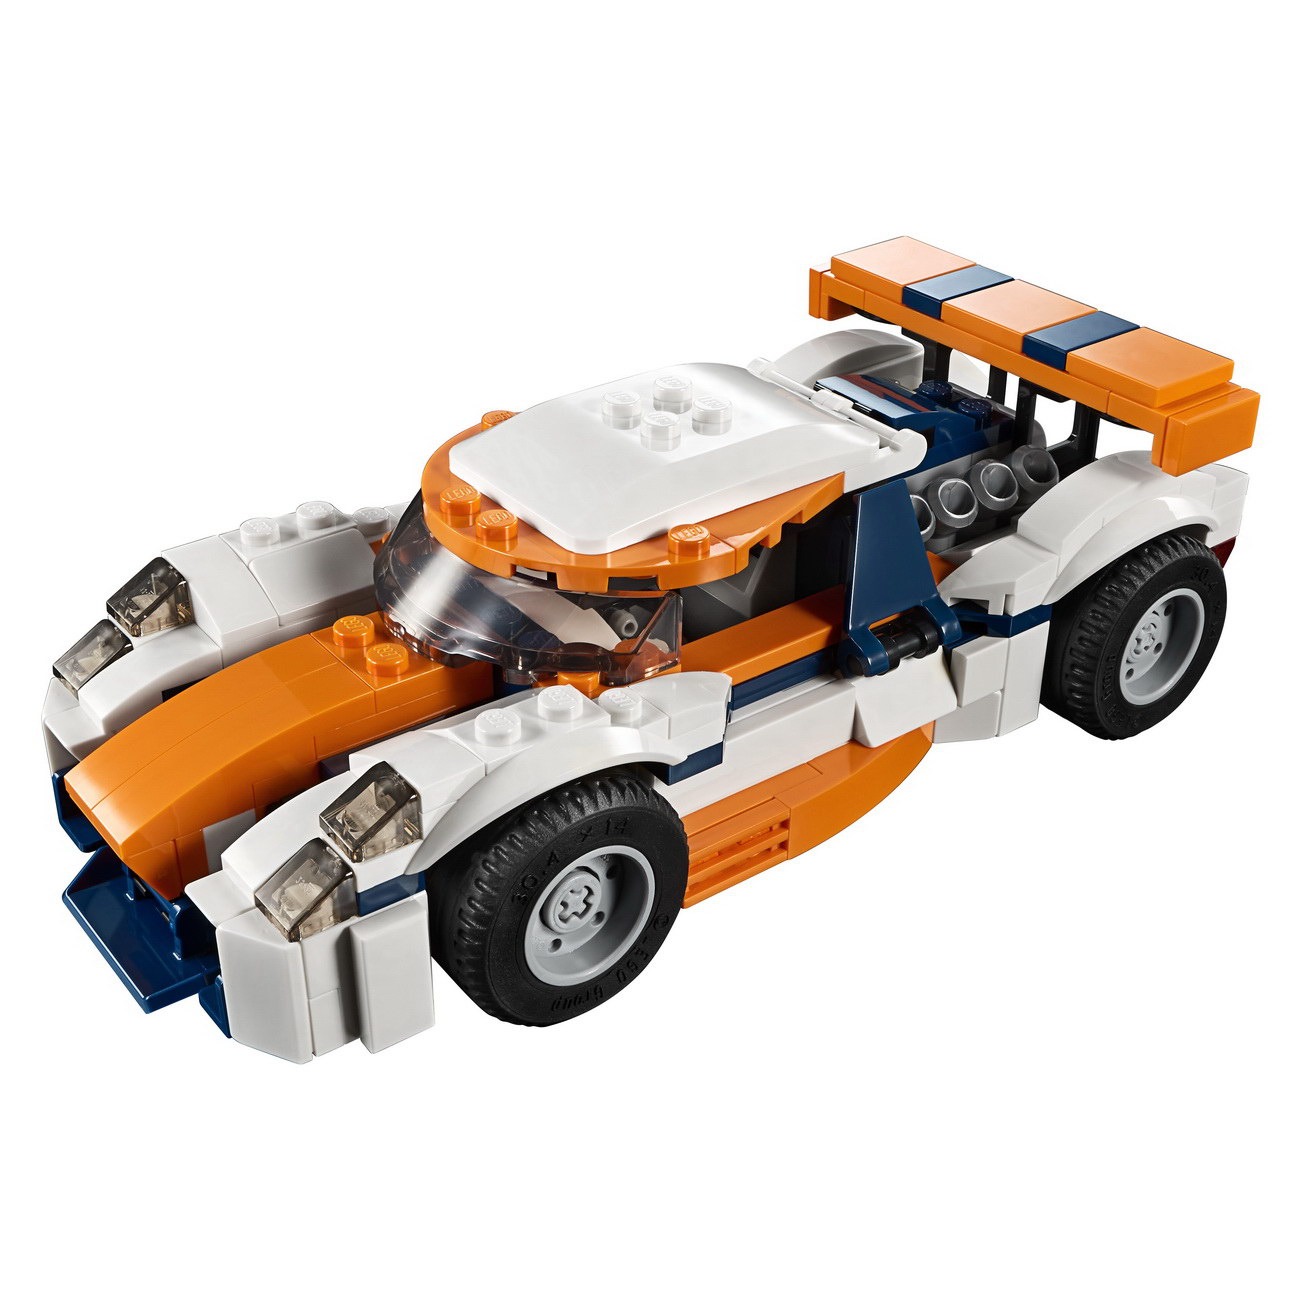 LEGO Creator 31089 - Rennwagen